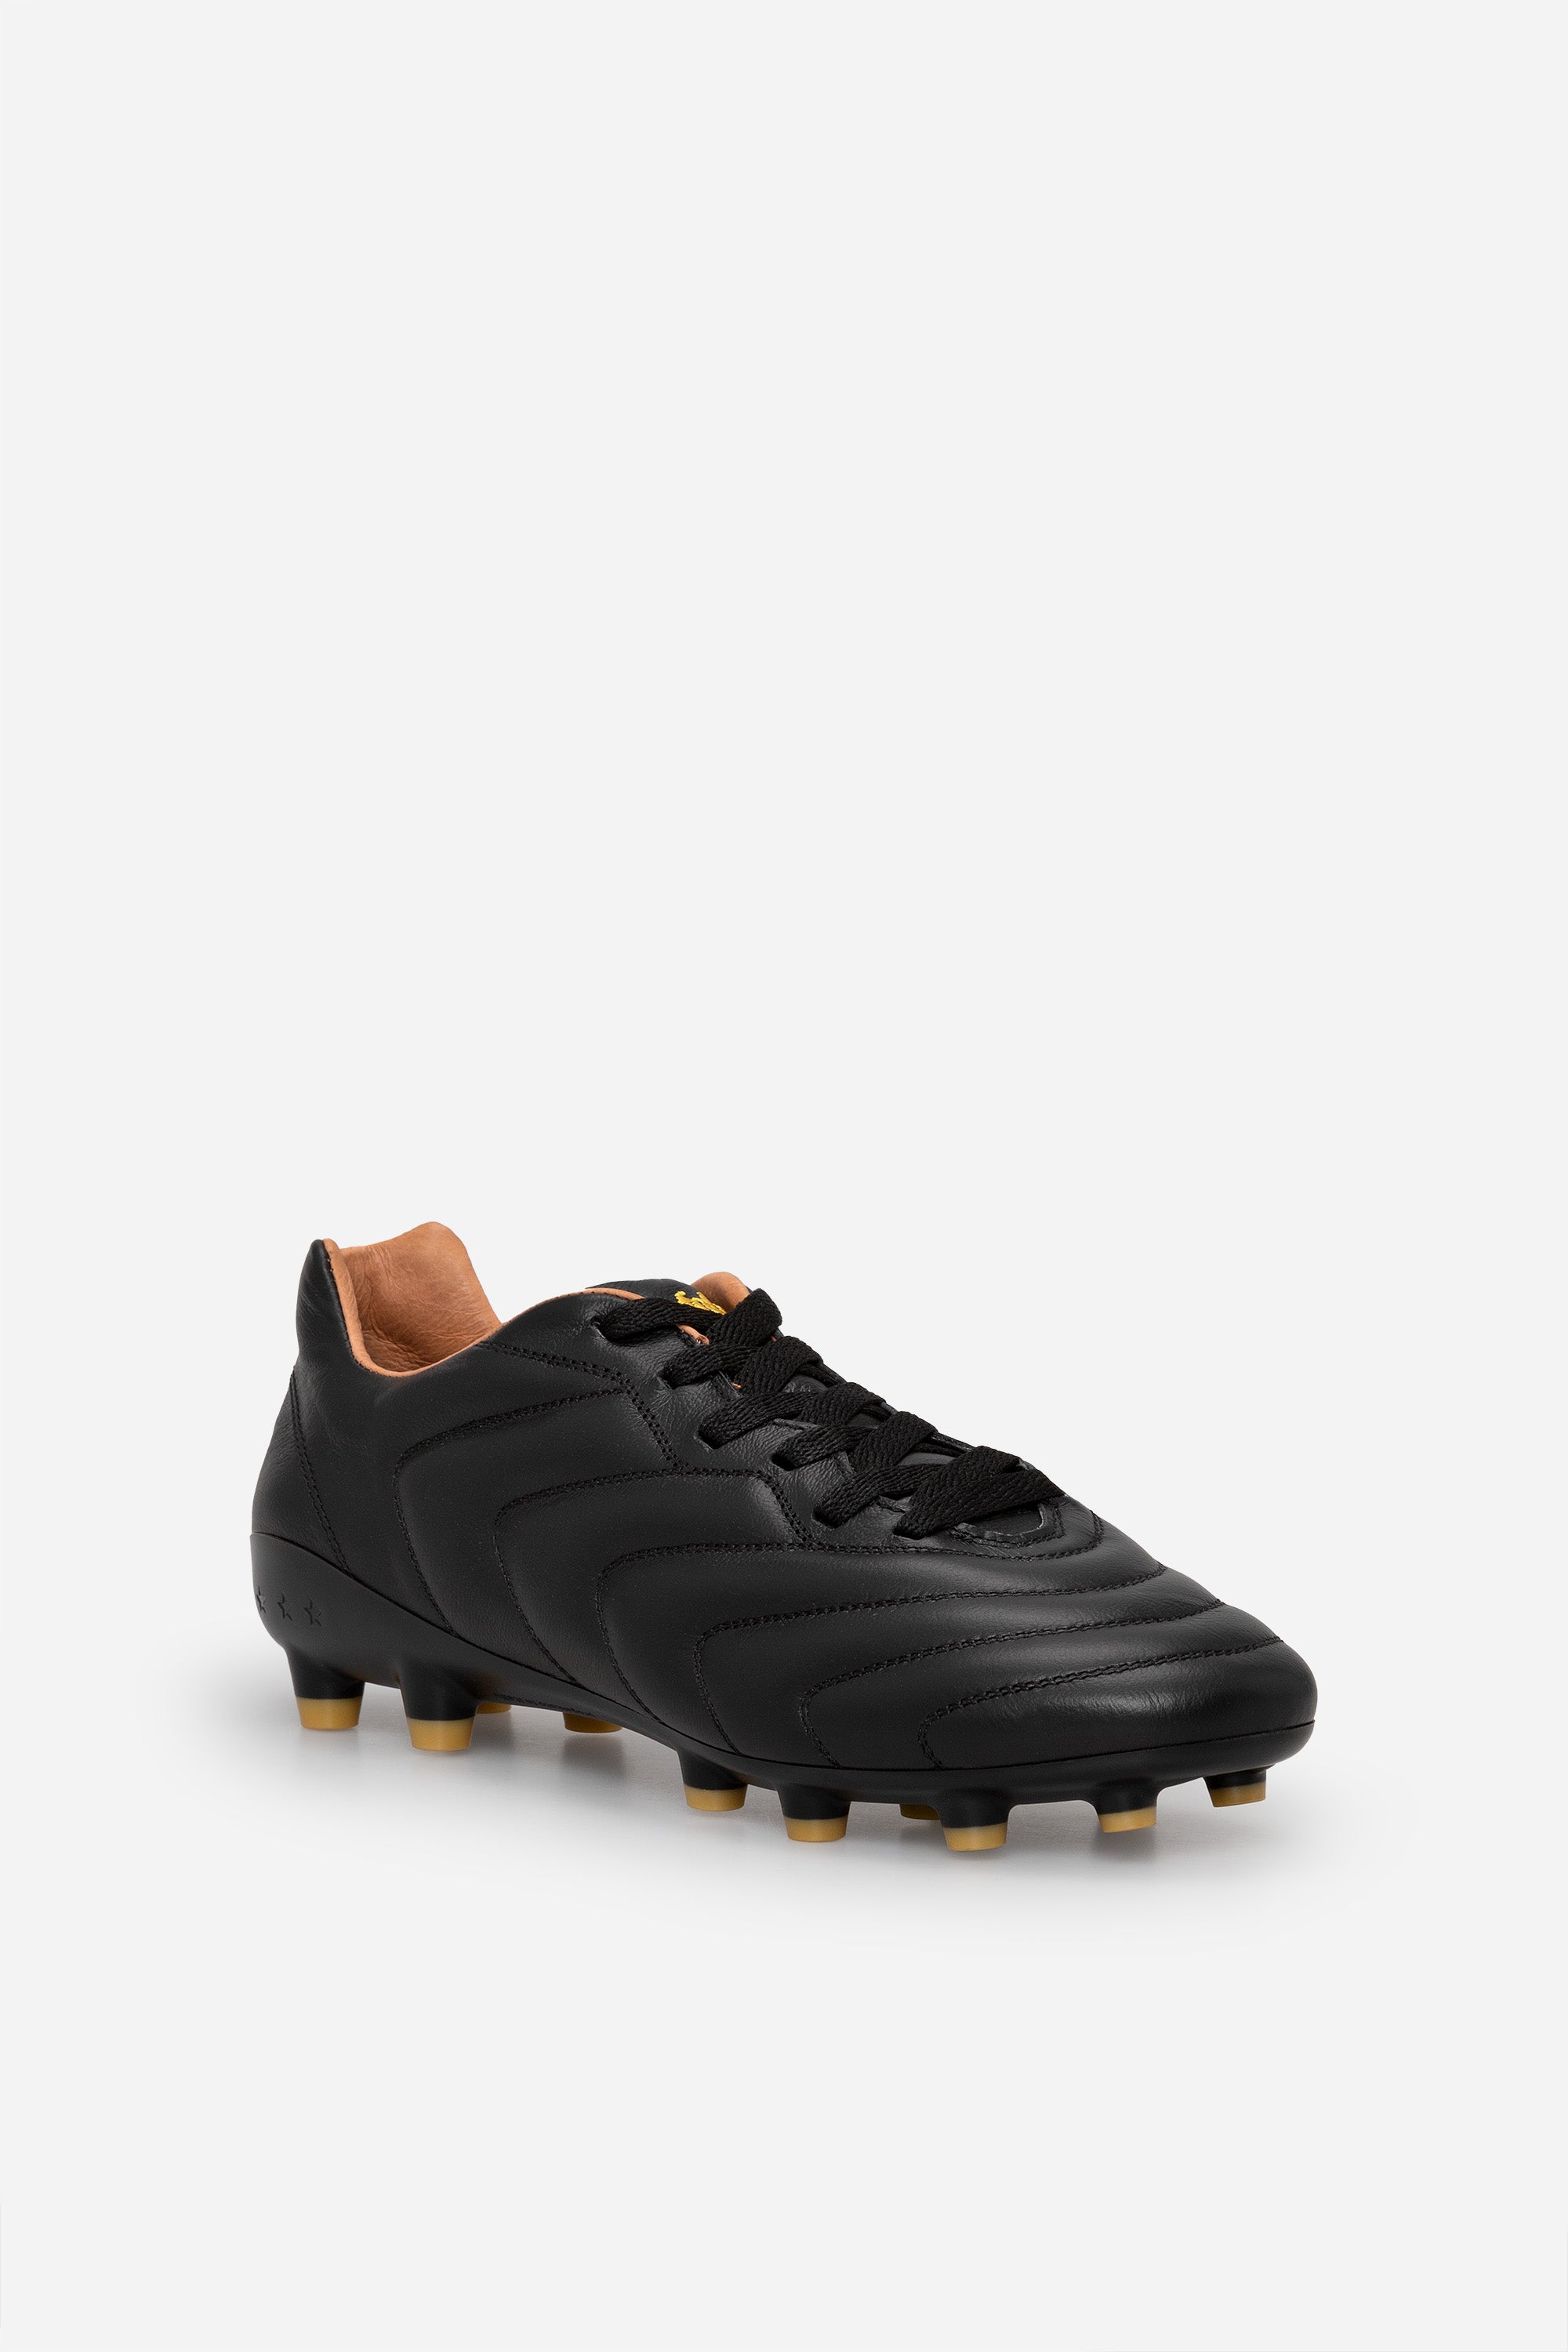 Pantofola d'Oro Superleggera 2.0 Leather Football Boot